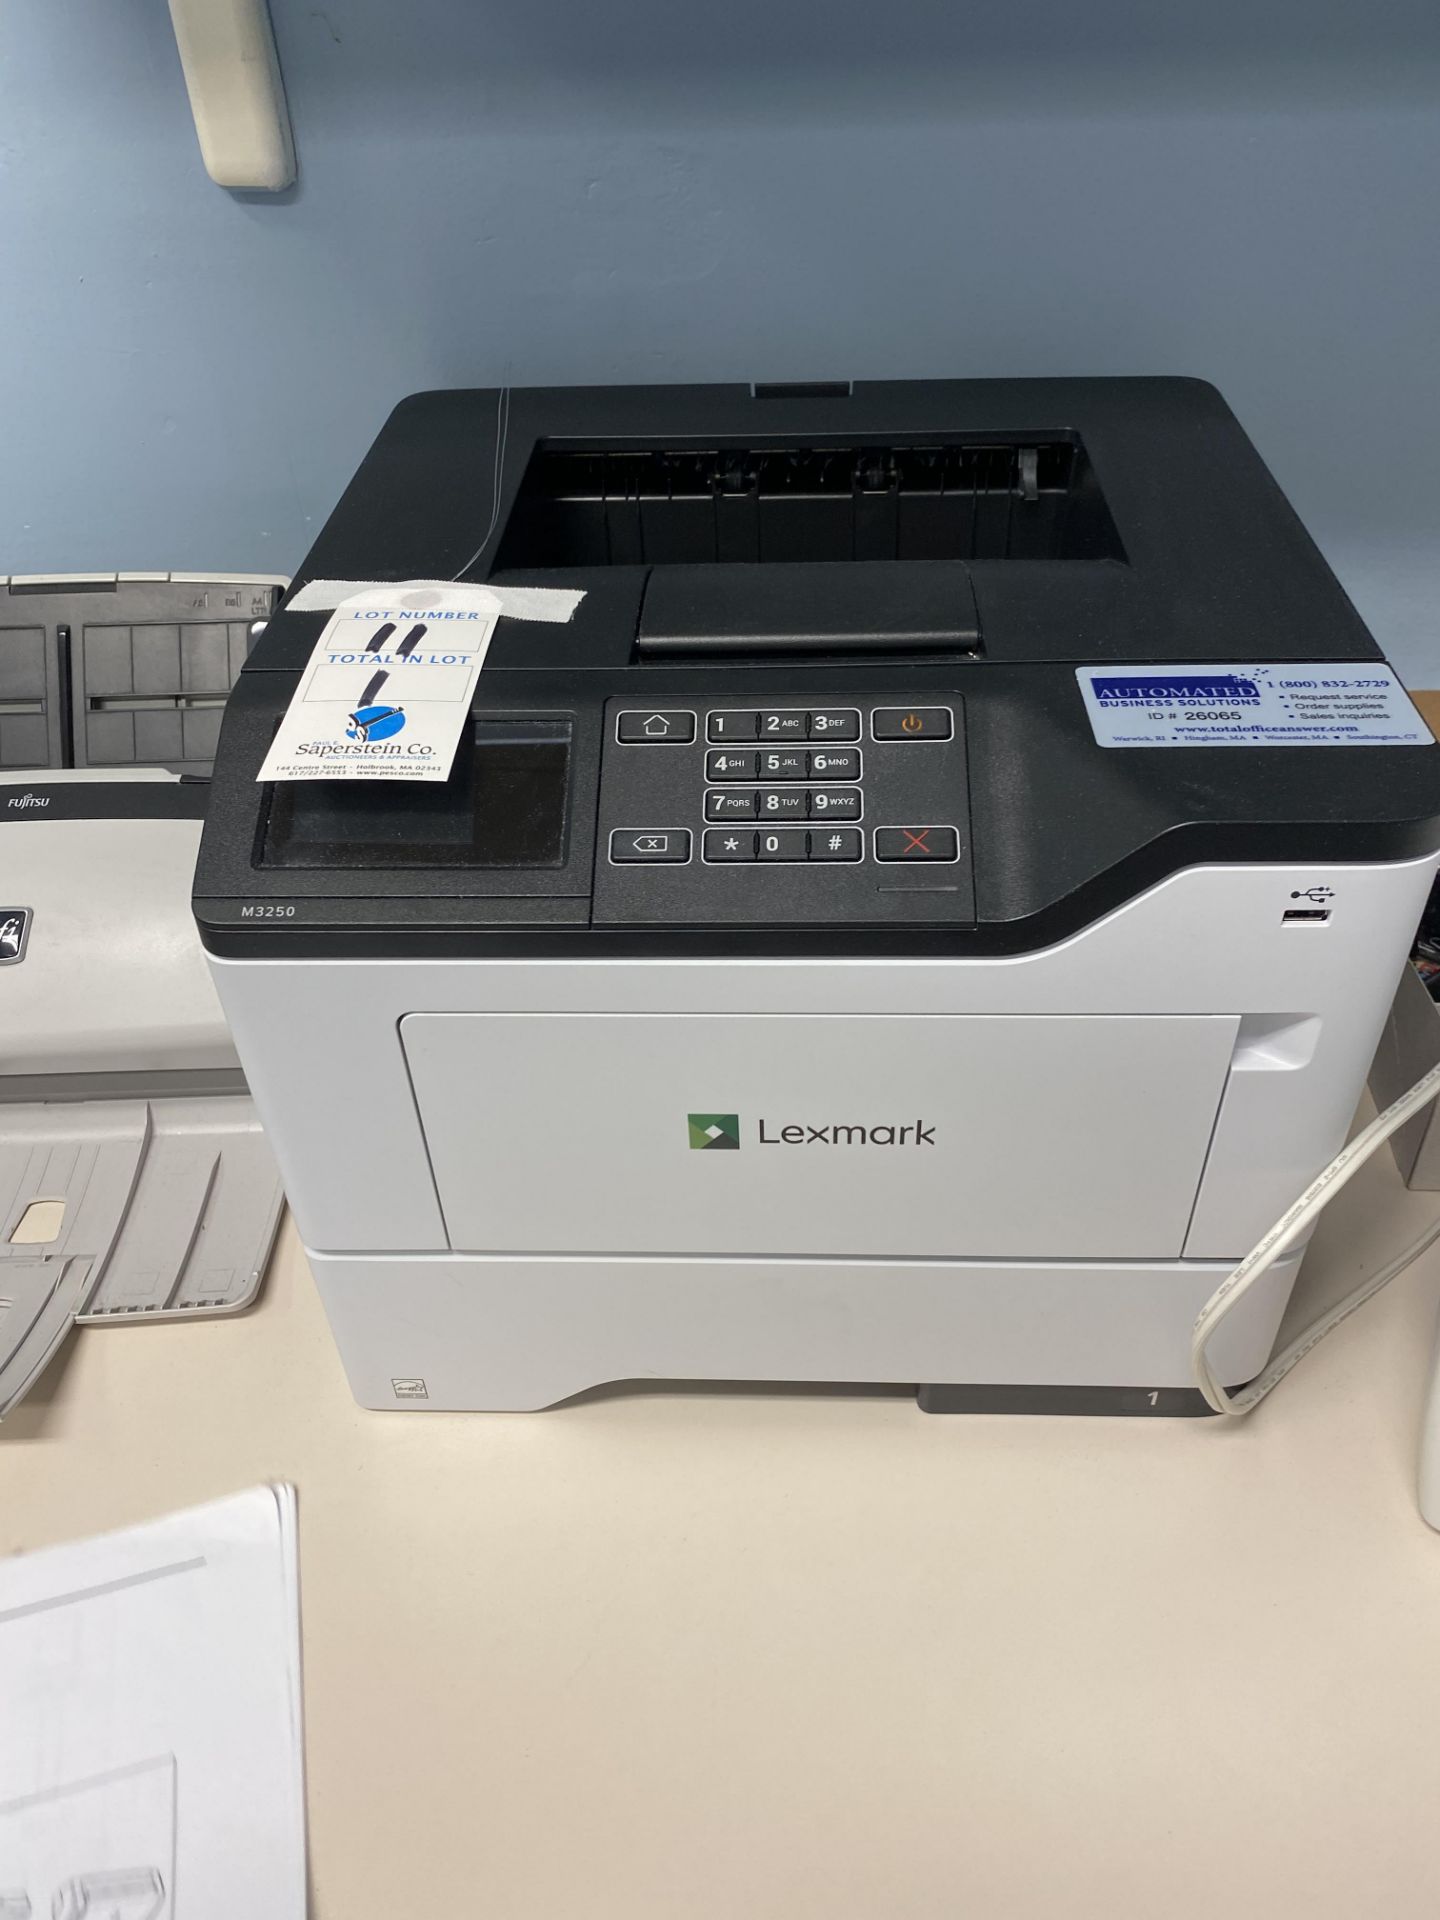 Lexmark #M3250 Printer